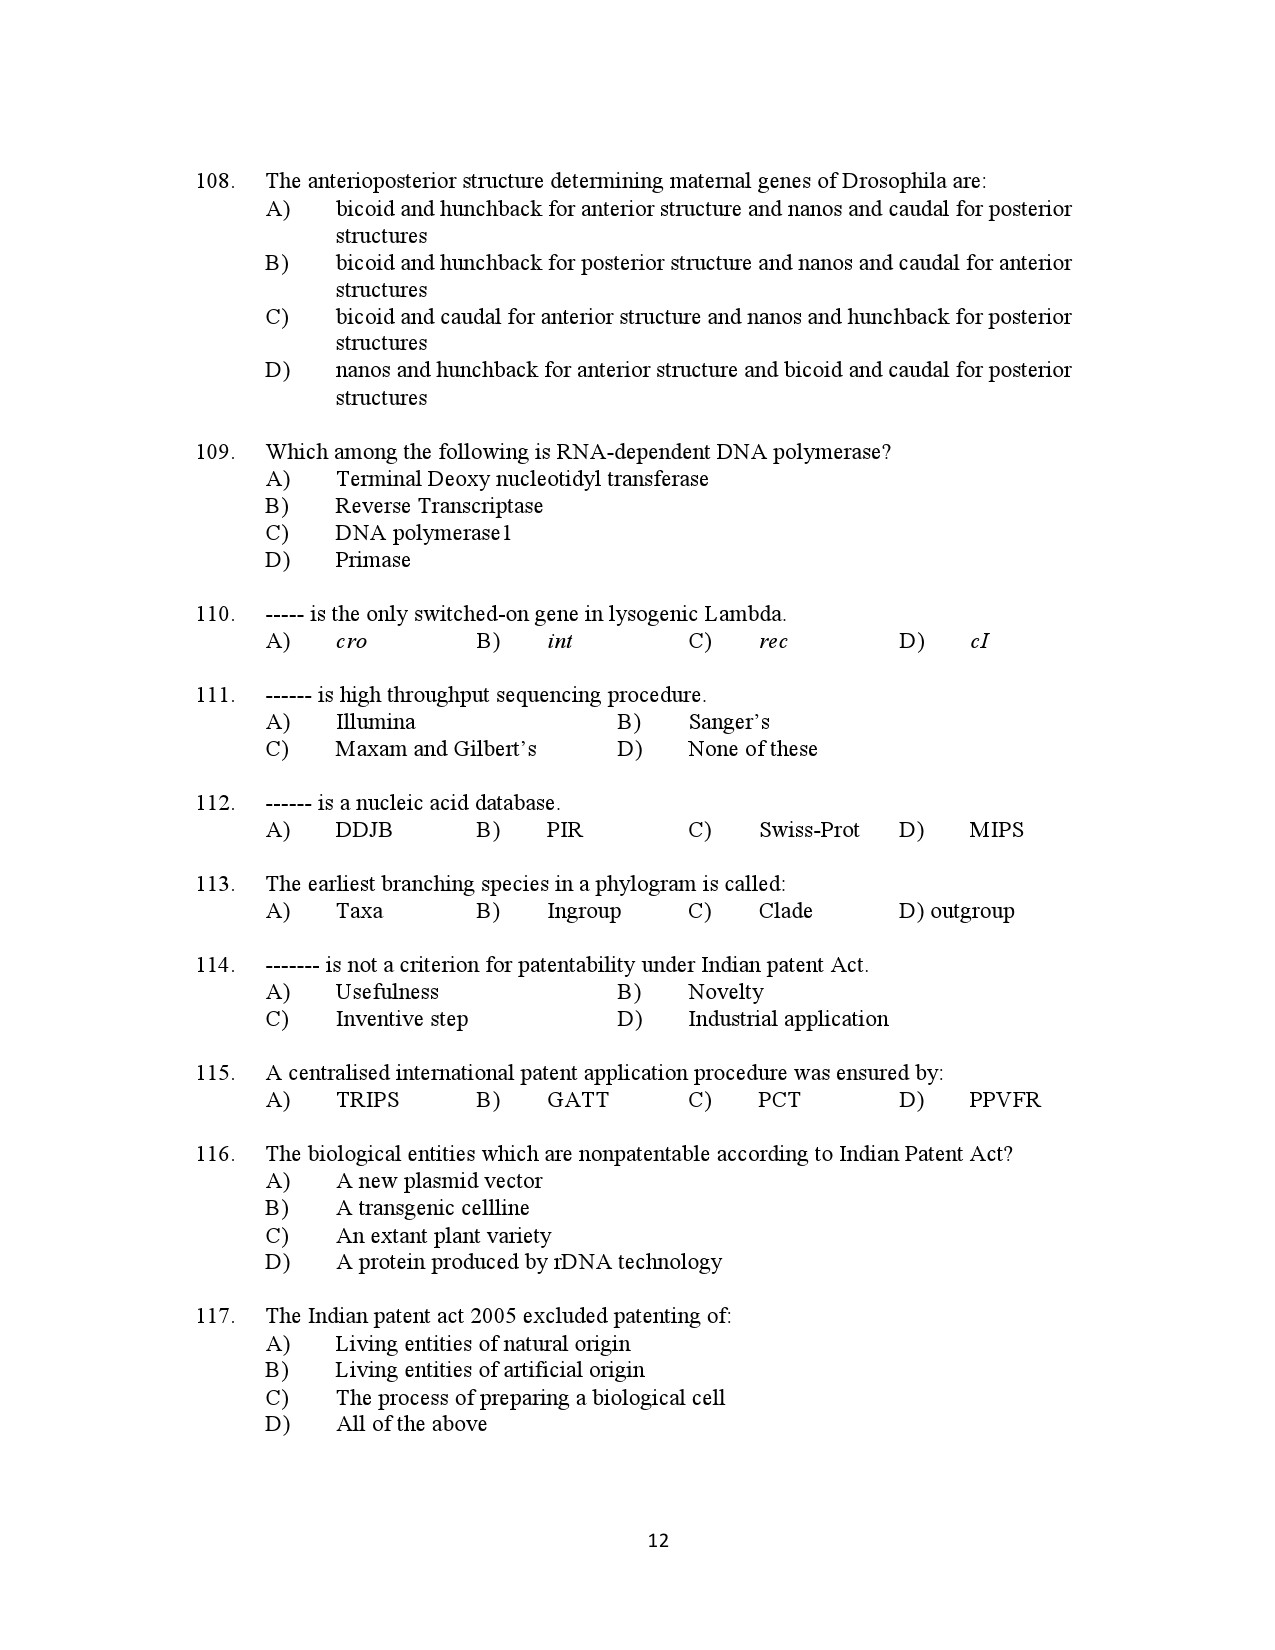 Kerala SET Biotechnology Exam Question Paper July 2021 12